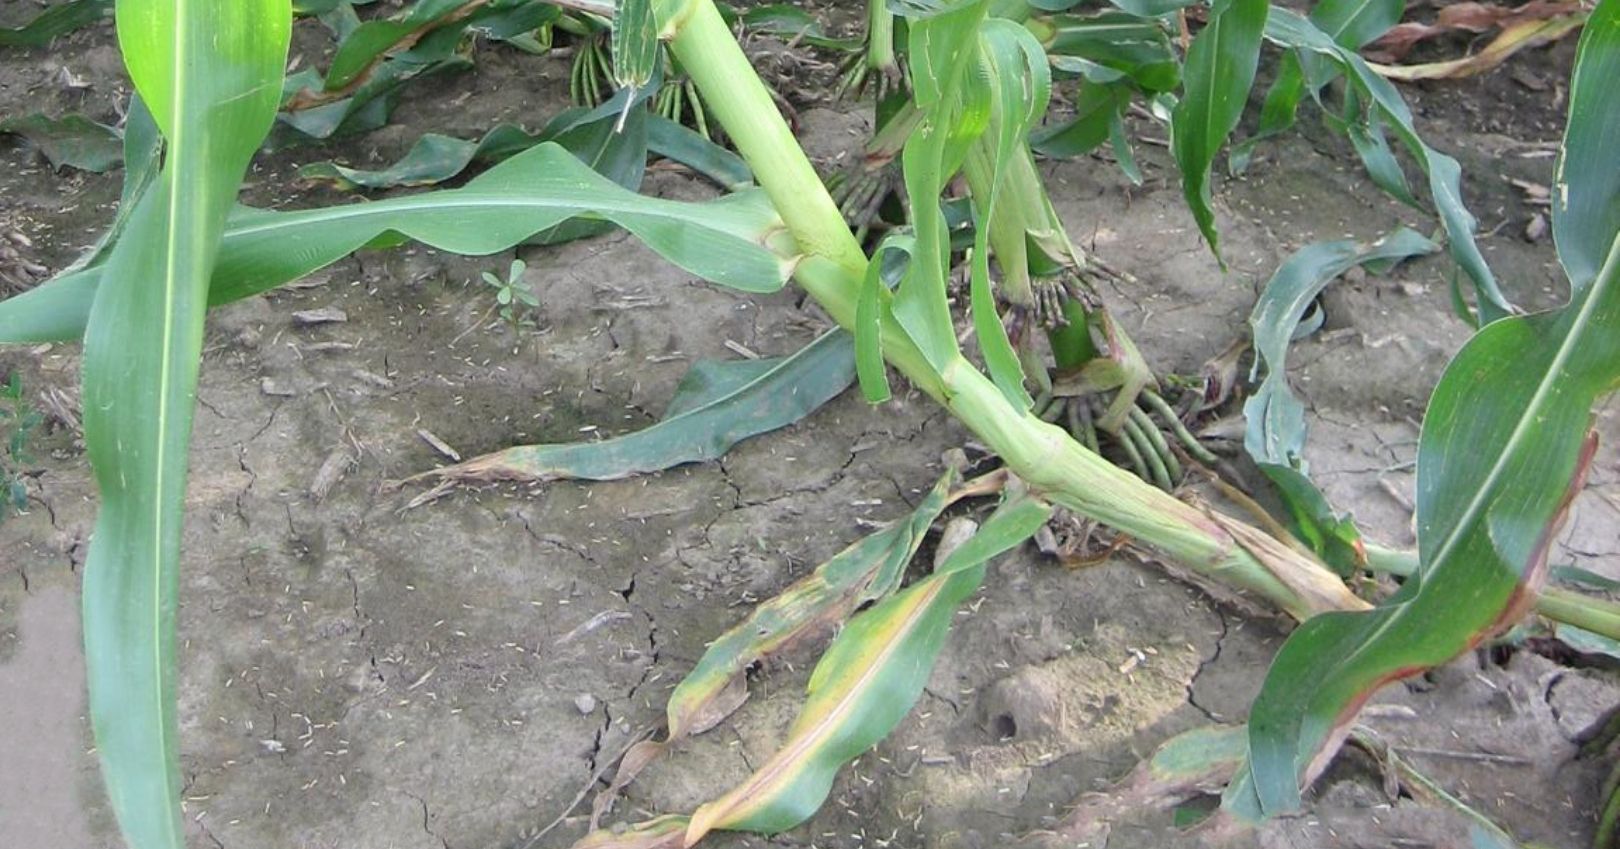 Western Corn Rootworm Damage